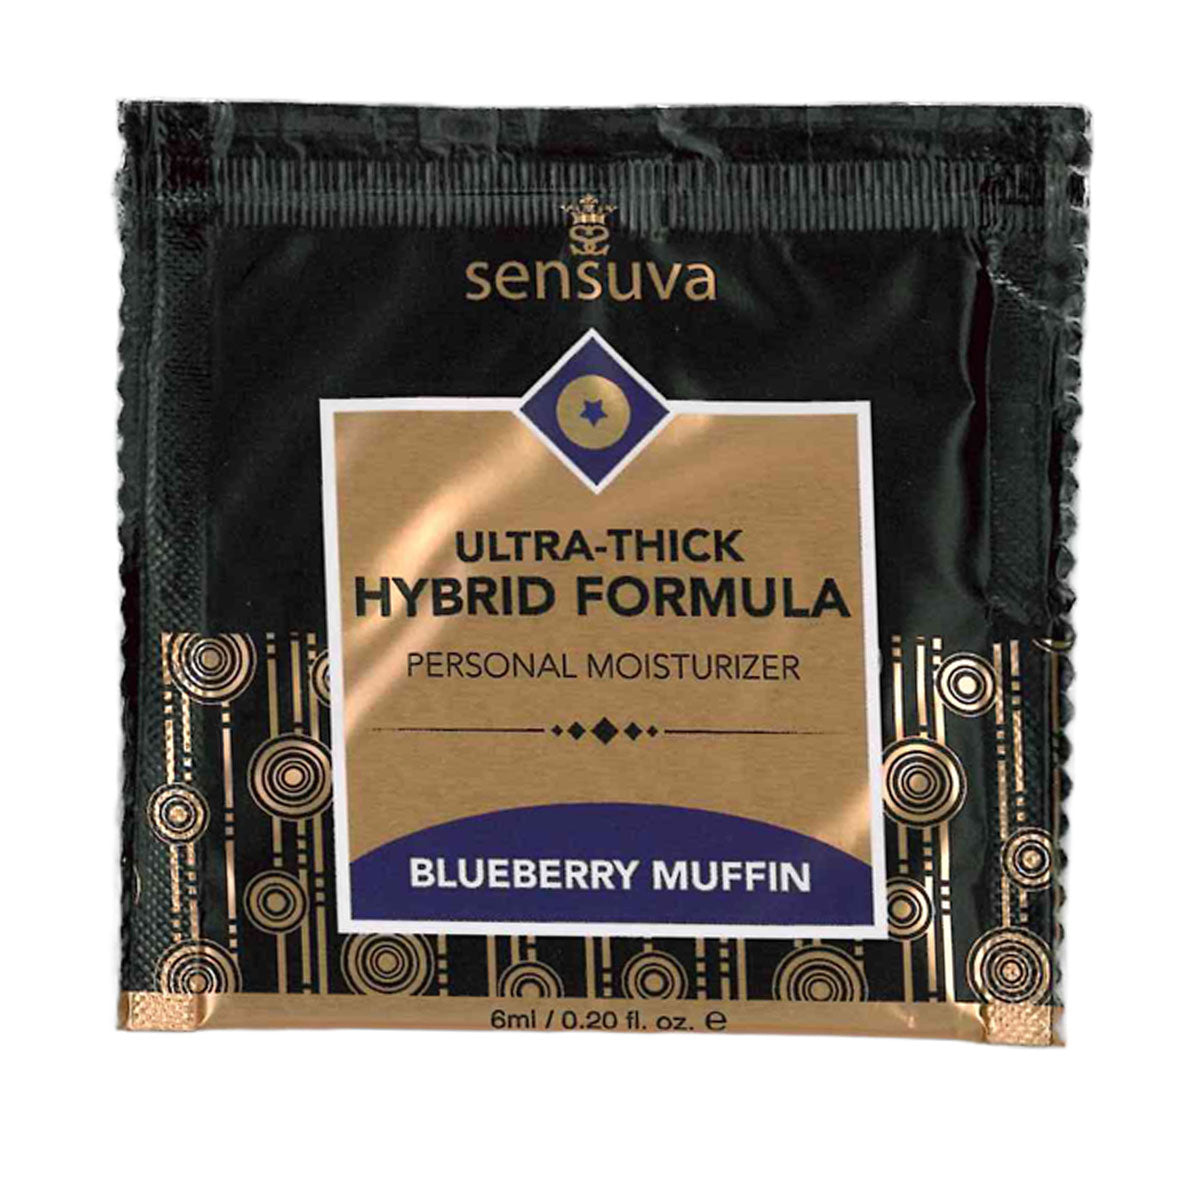 Sensuva – Ultra-Thick Hybrid Formula Personal Moisturizer – Blueberry Muffin - Foil 6ml/0.20 fl oz.